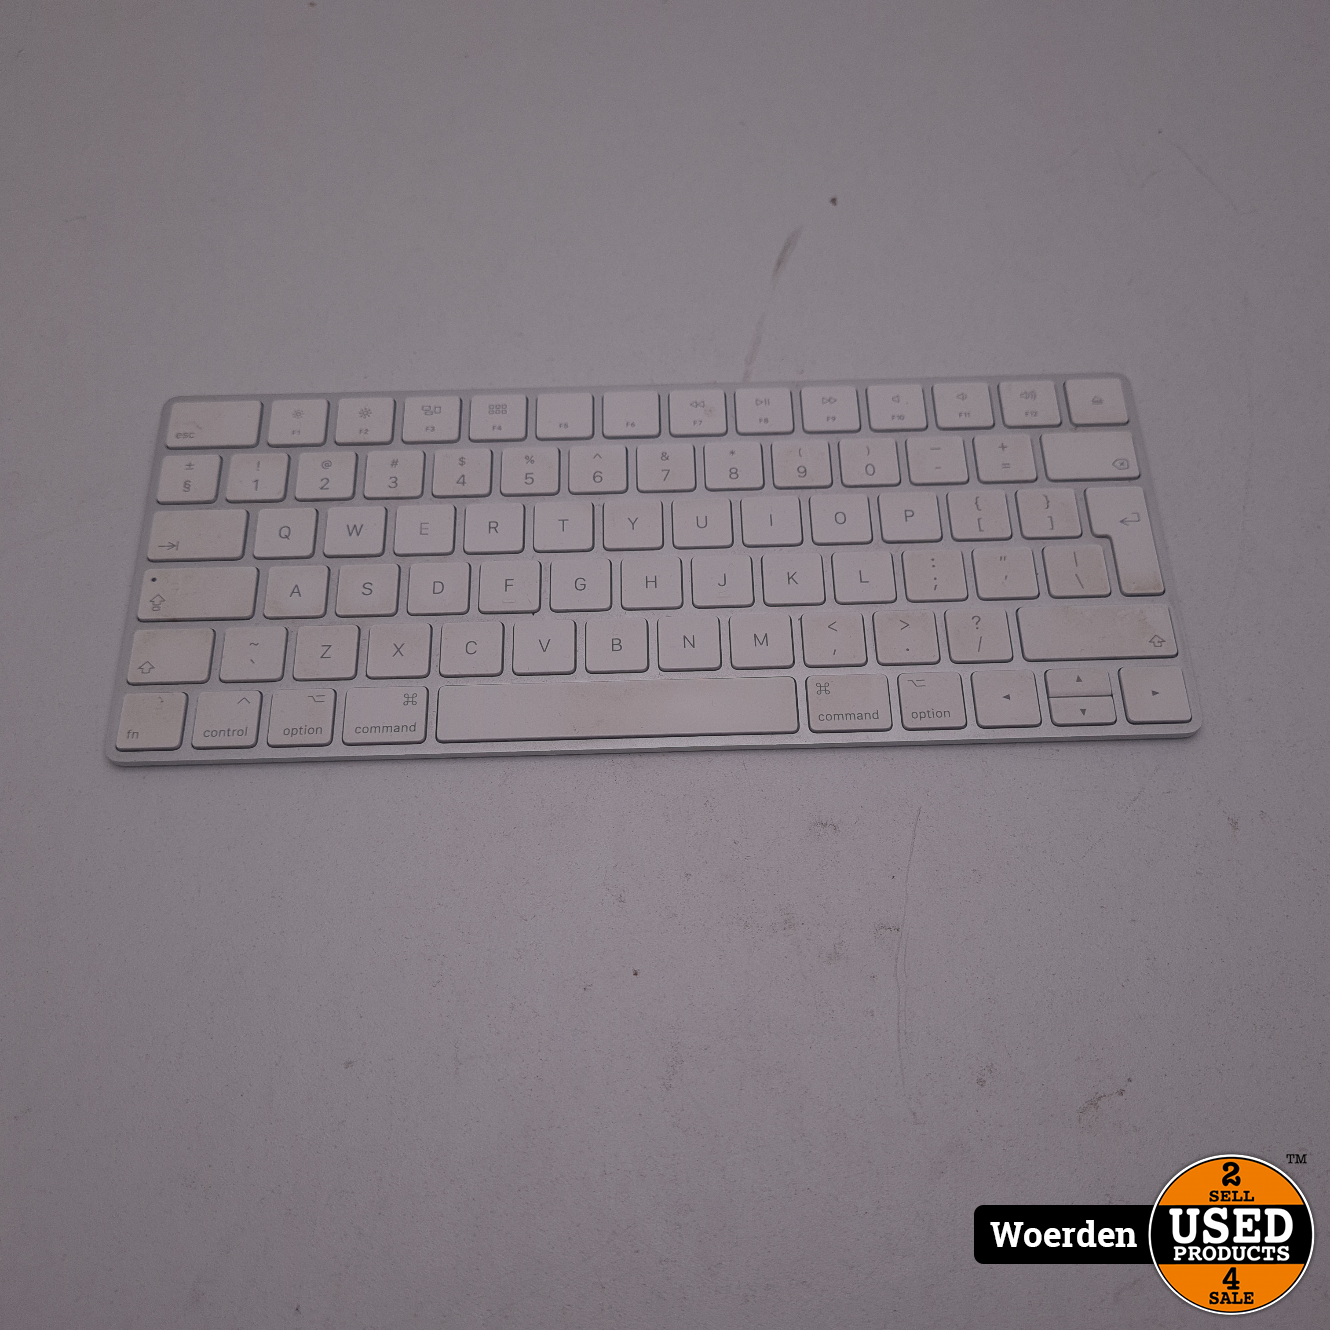 Oneerlijkheid commando Augment Apple Magic Keyboard Draadloos Toetsenbord met Garantie - Used Products  Woerden